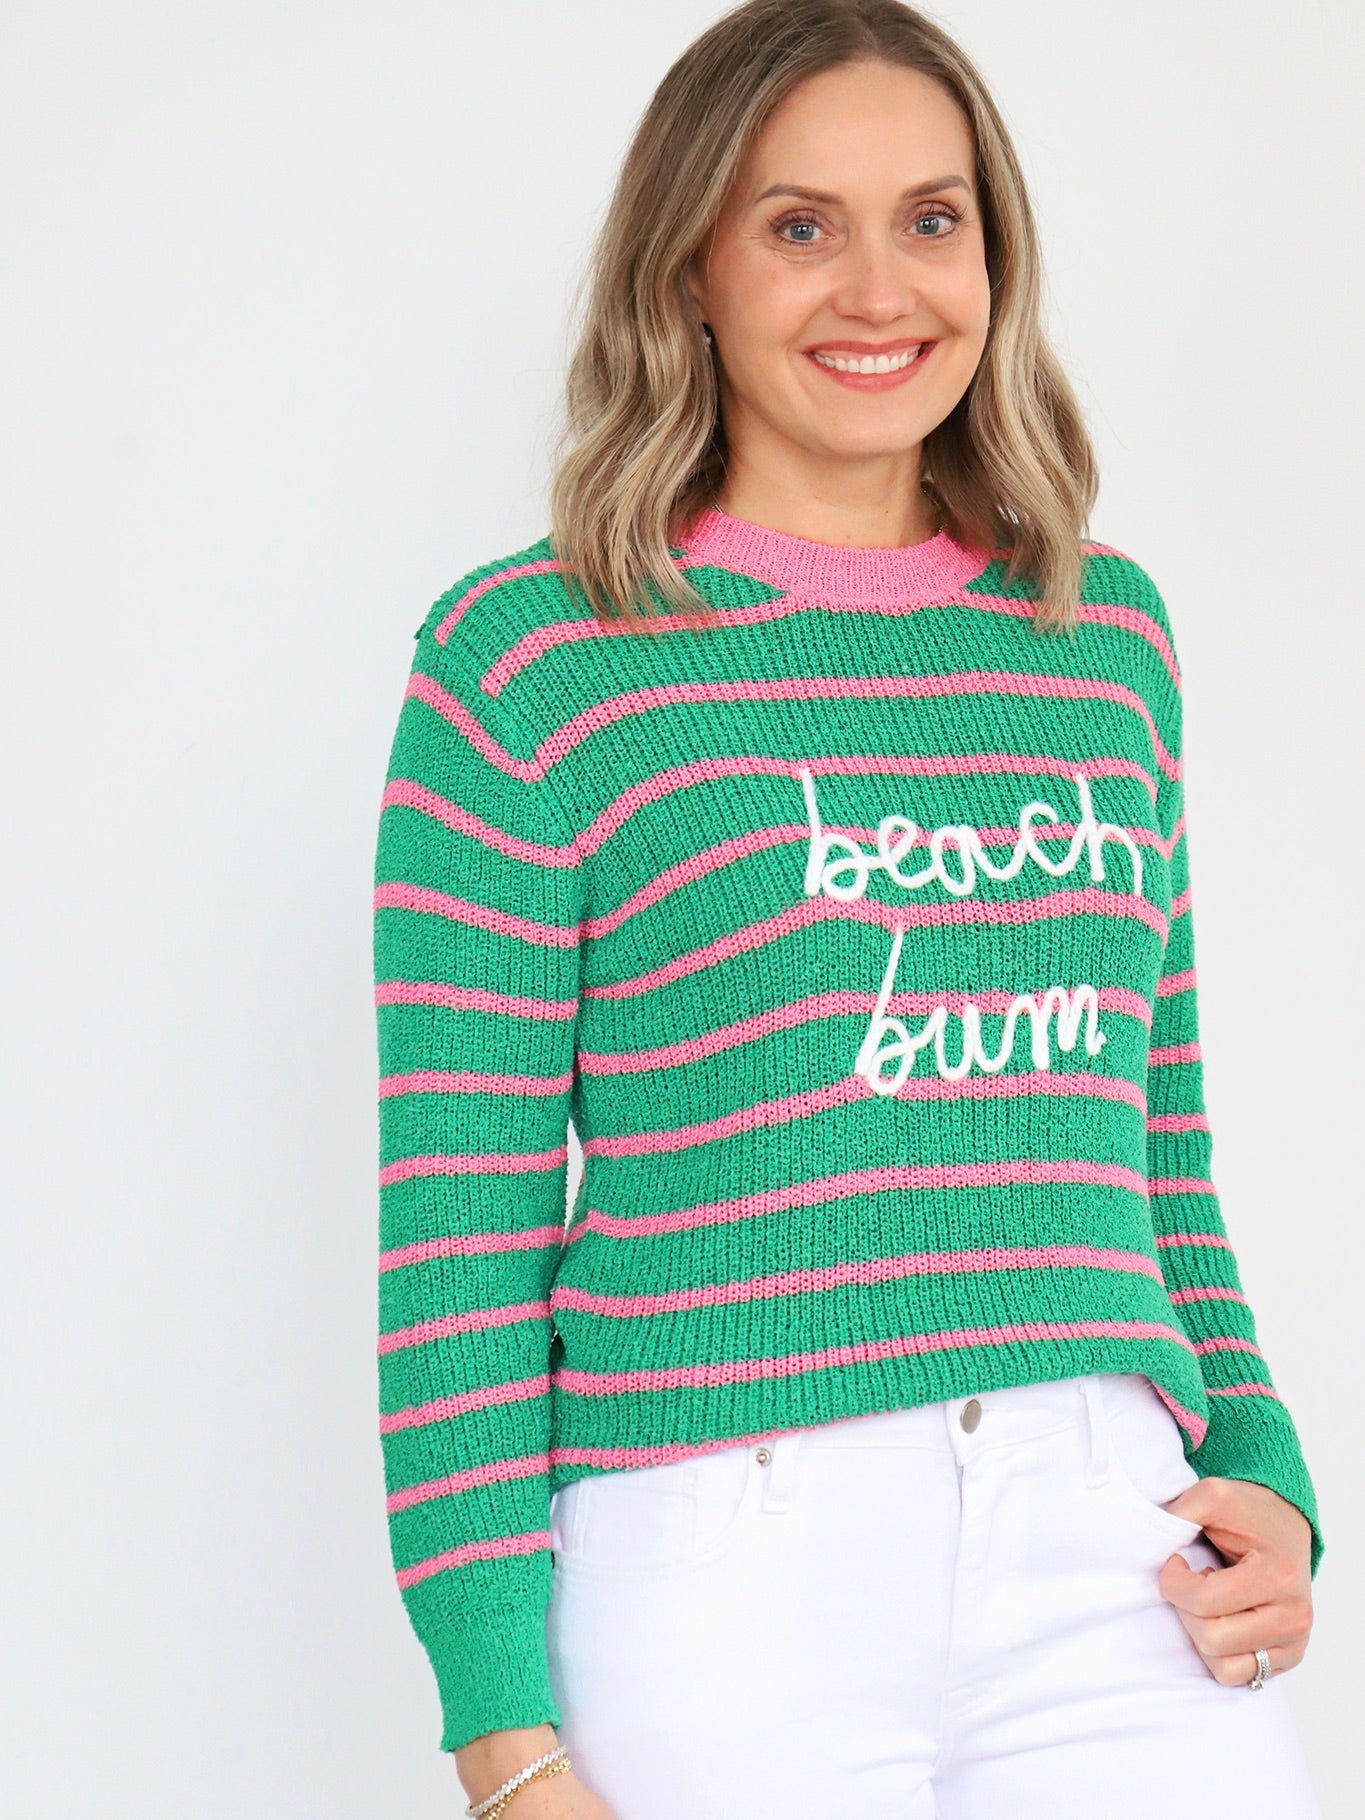 Beach Bum Sweater